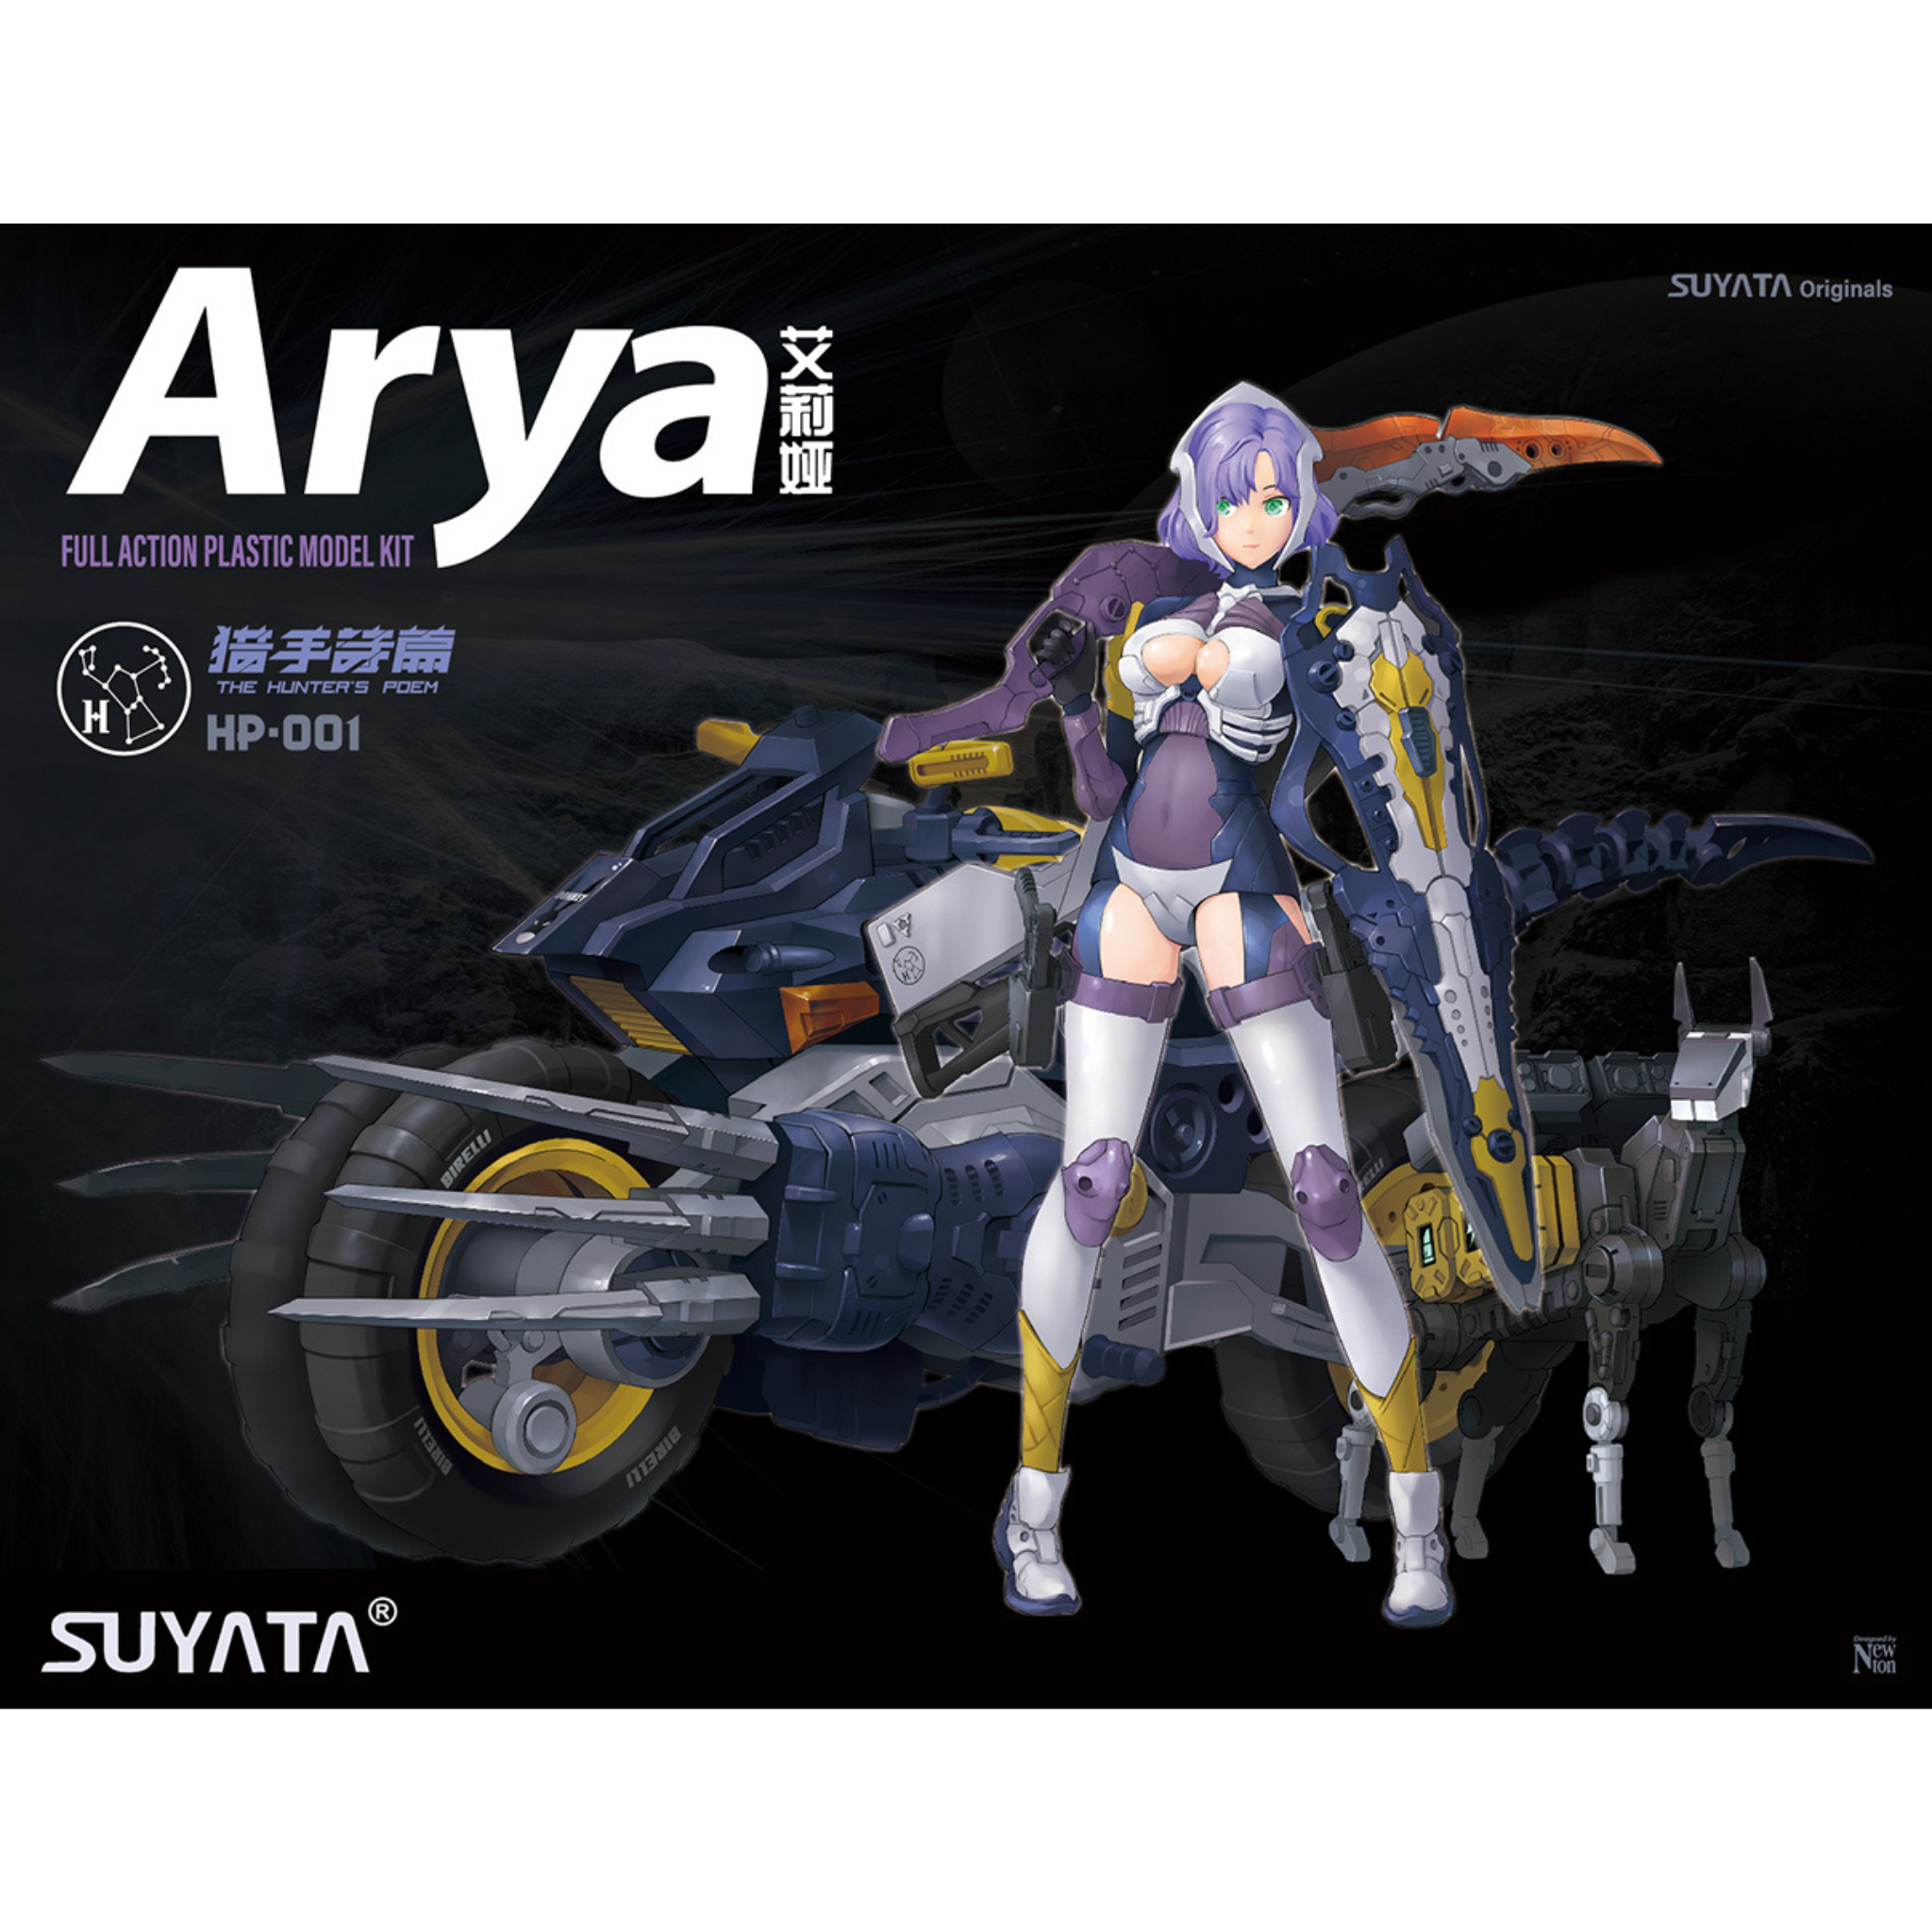 Arya -The Hunter’s Poem #HP-001 1/12 Figure Kit by Suyata